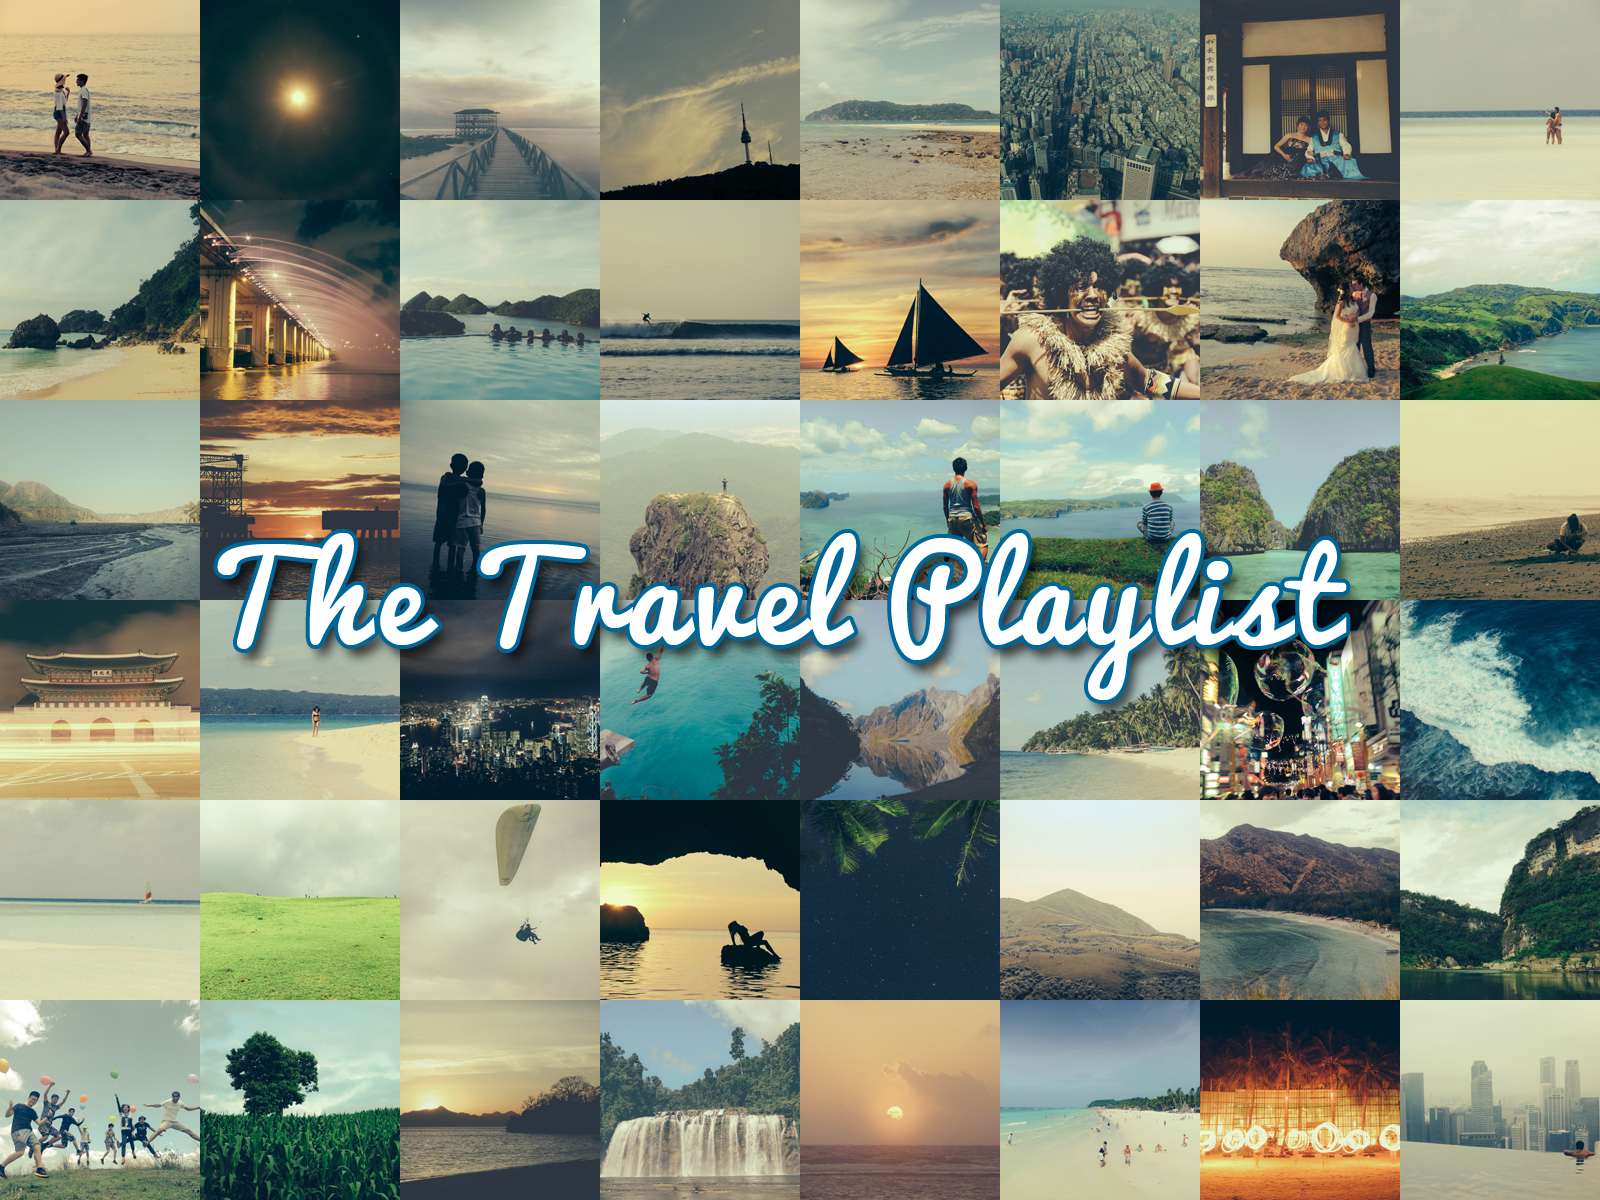 48 travel songs